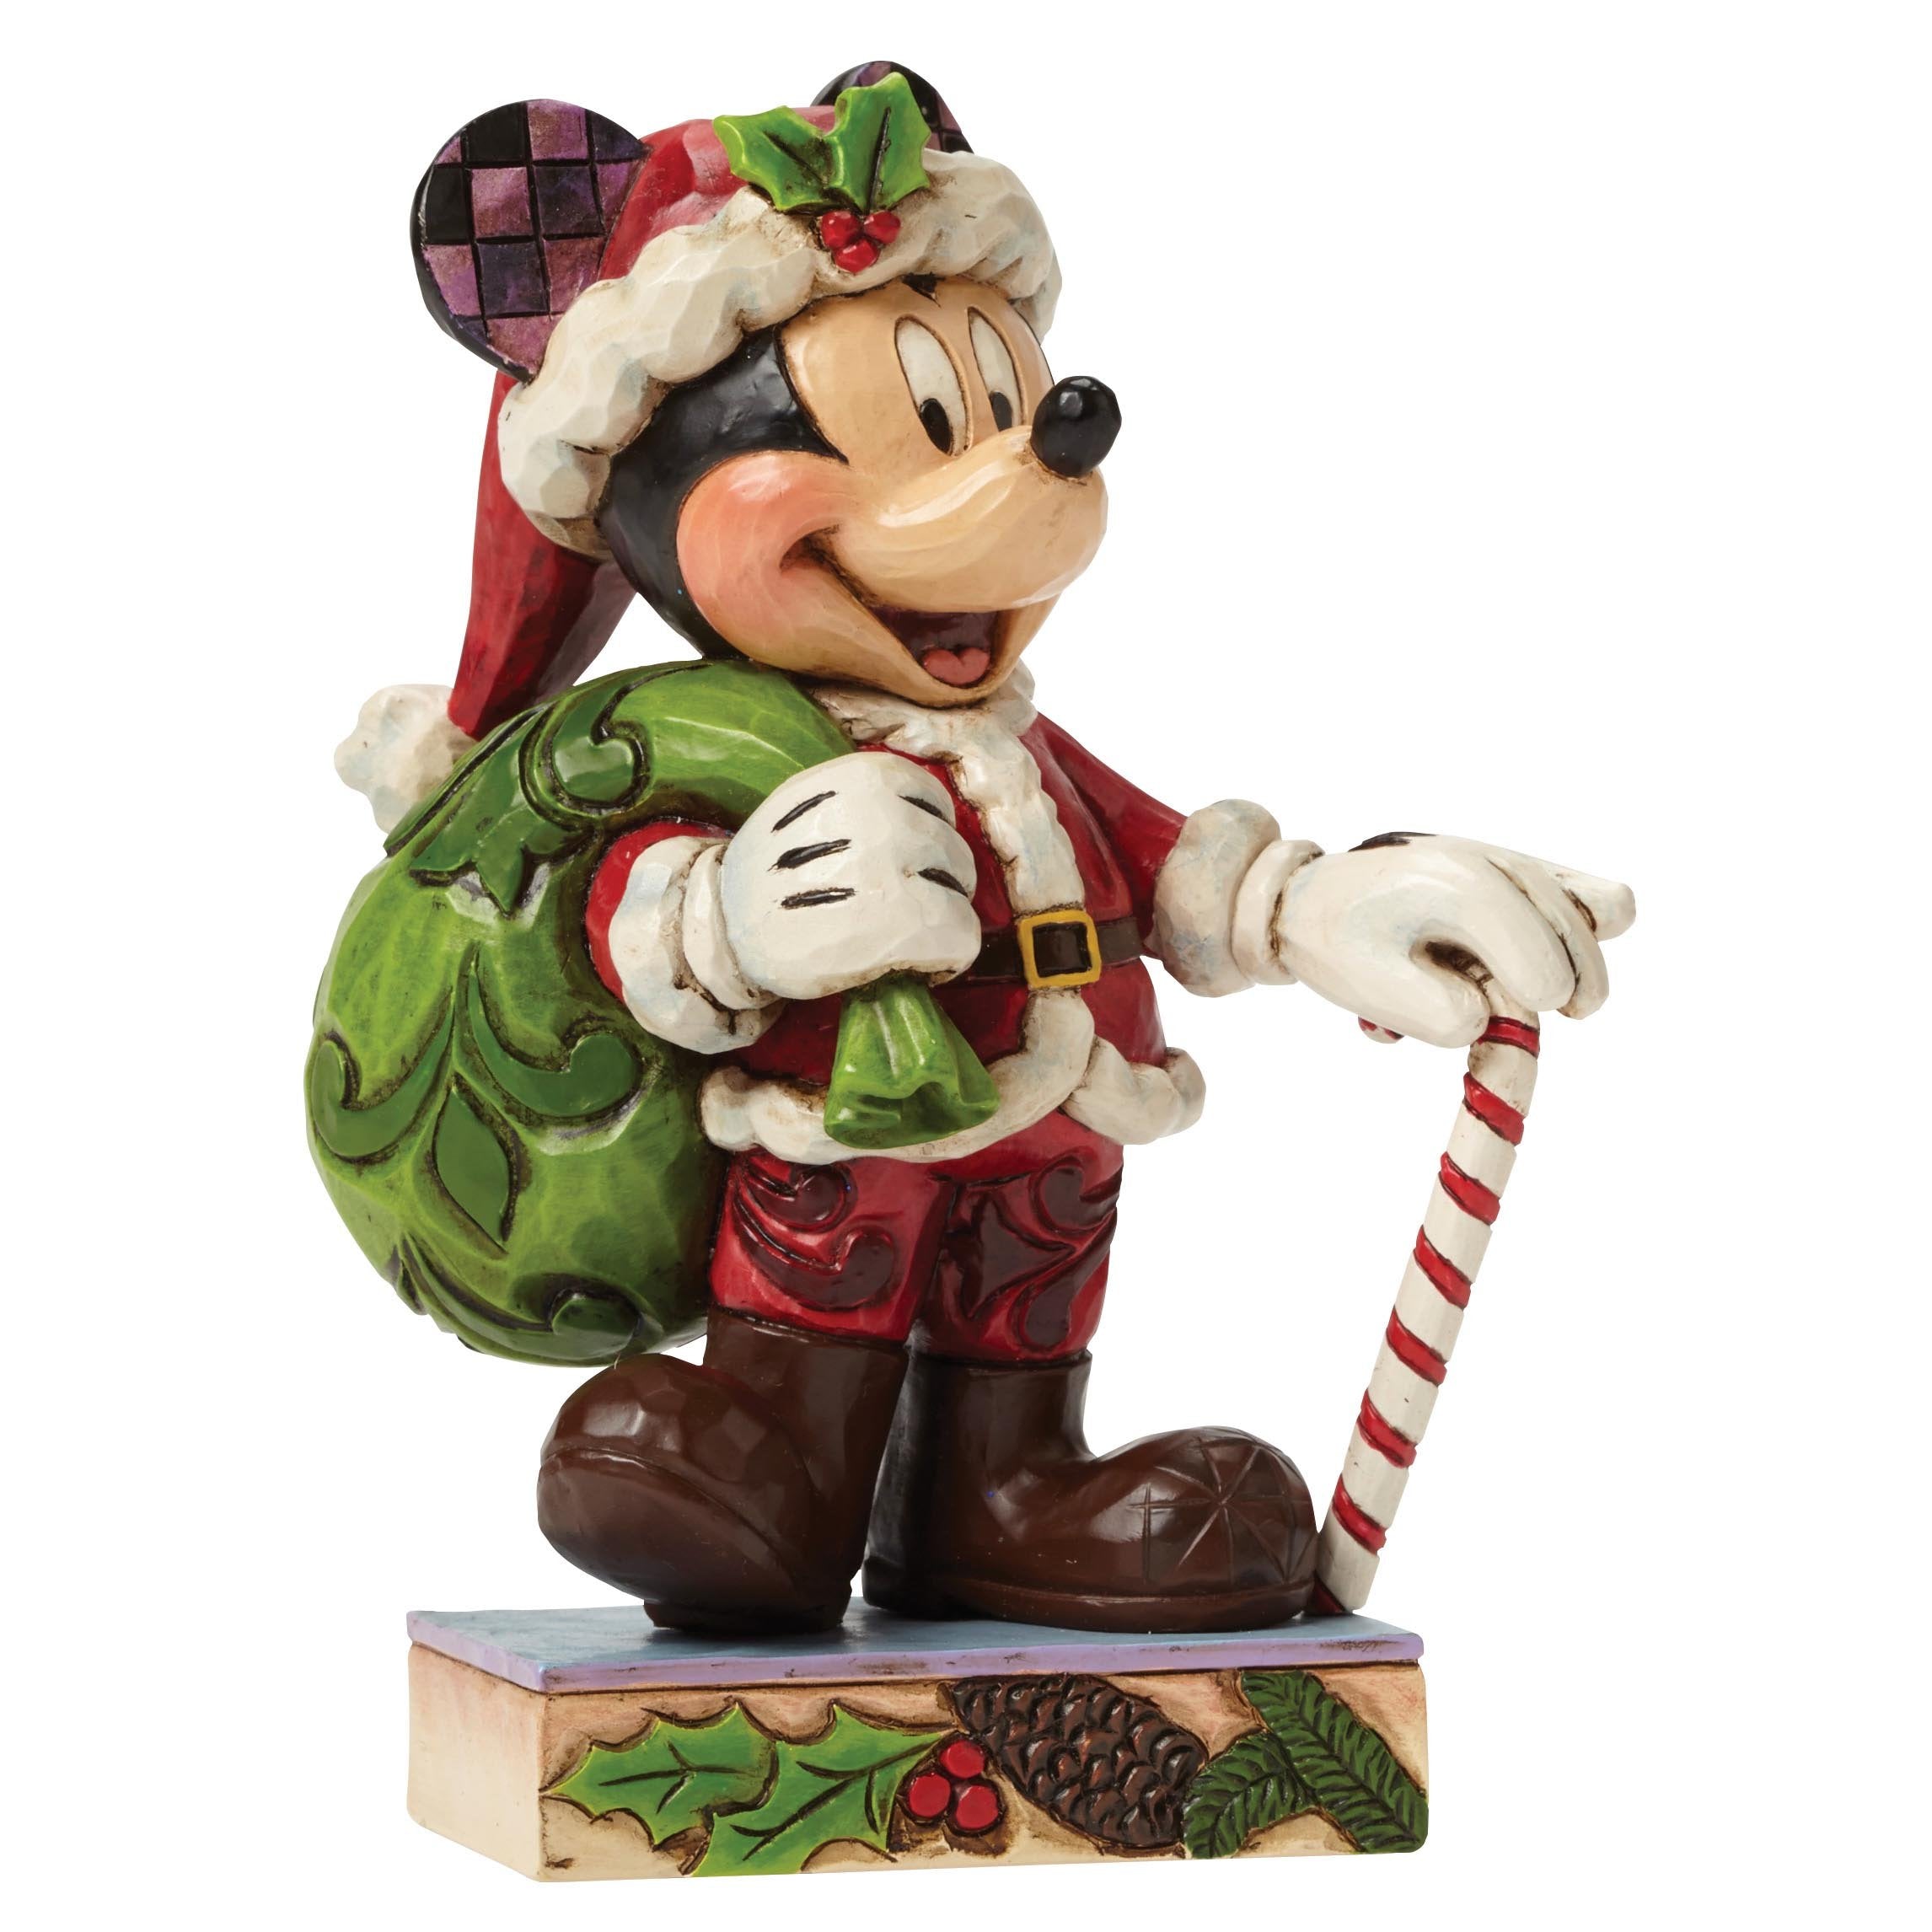 Jim Shore for Enesco Disney Traditions by Christmas Mickey Figurine, 4.5"